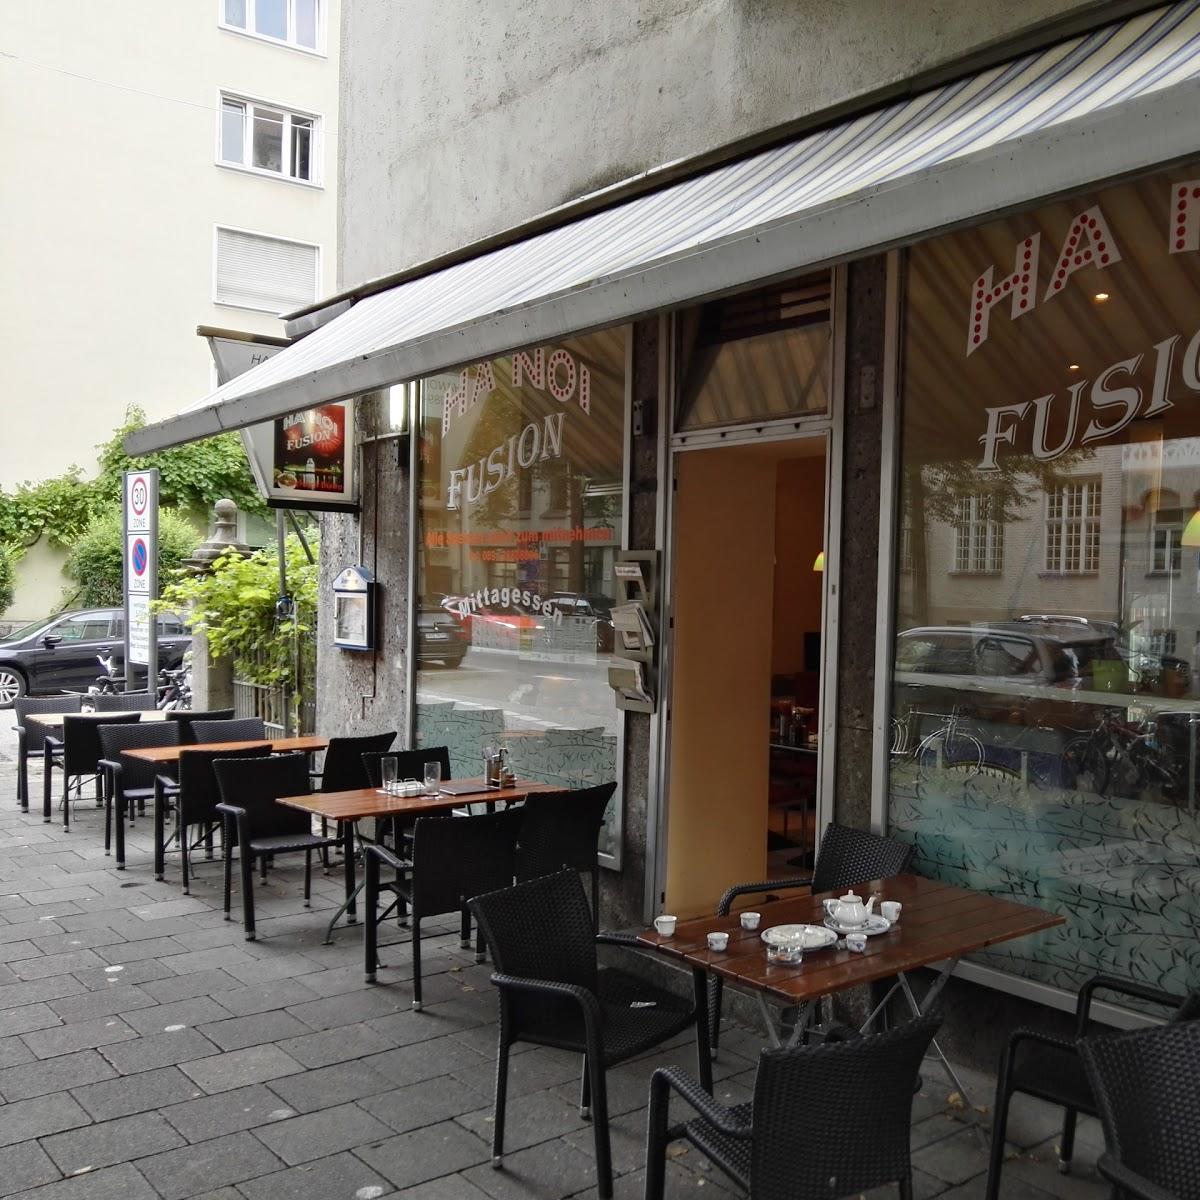 Restaurant "Ha Noi Fusion" in München